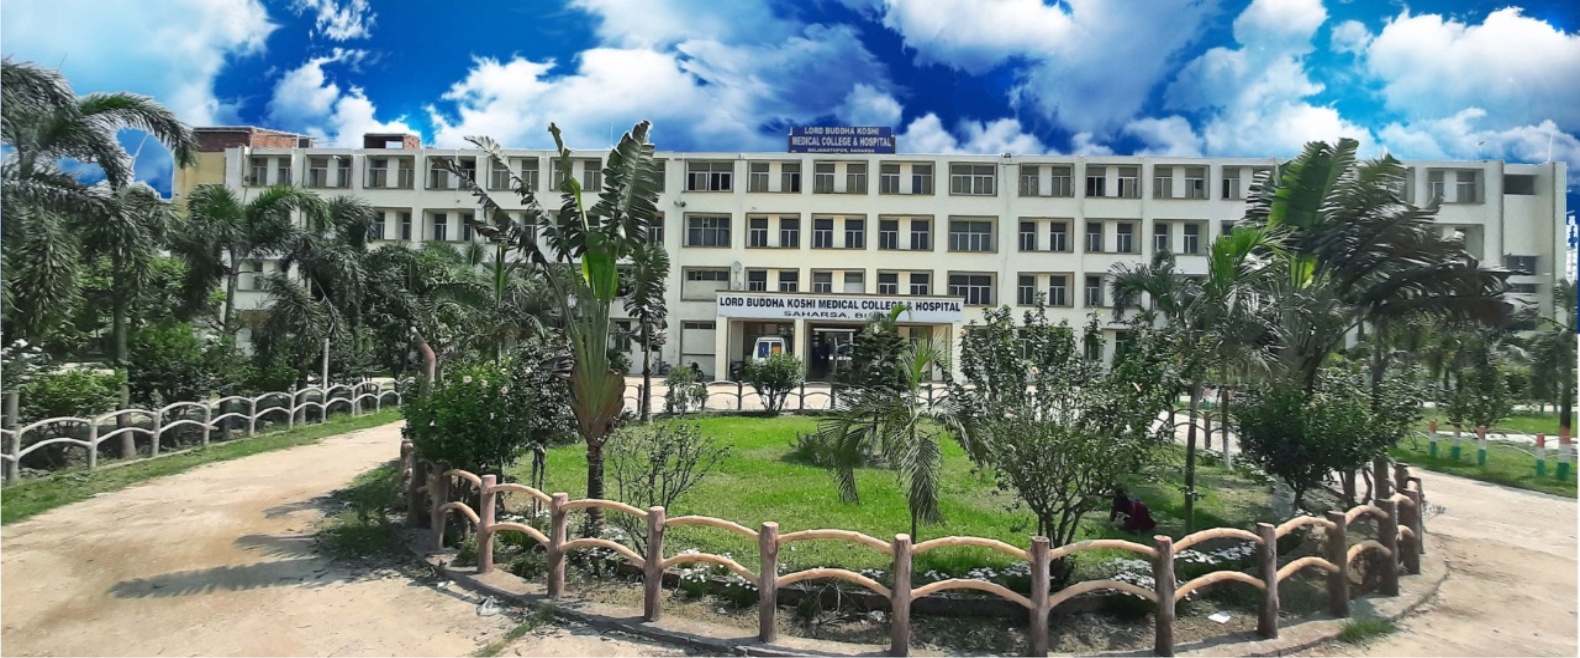 Lord Buddha Koshi Medical College & Hospital